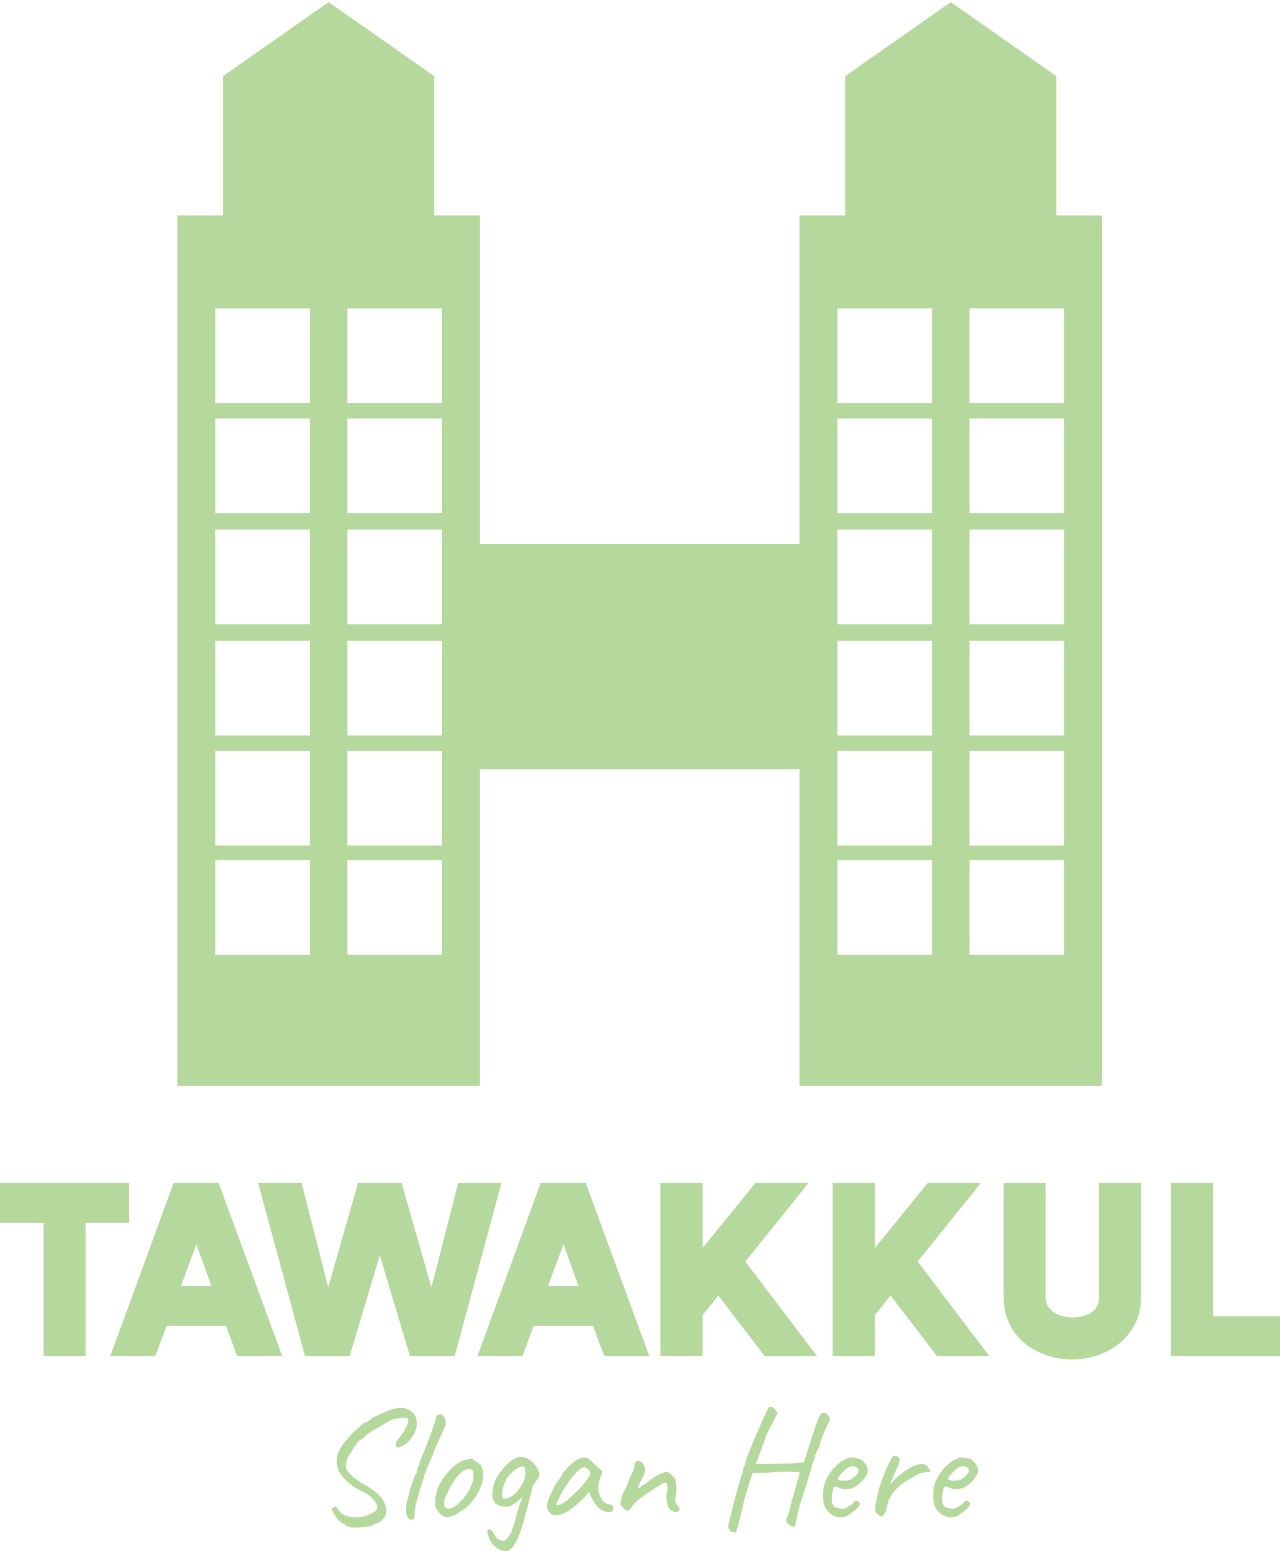 tawakkul's web page